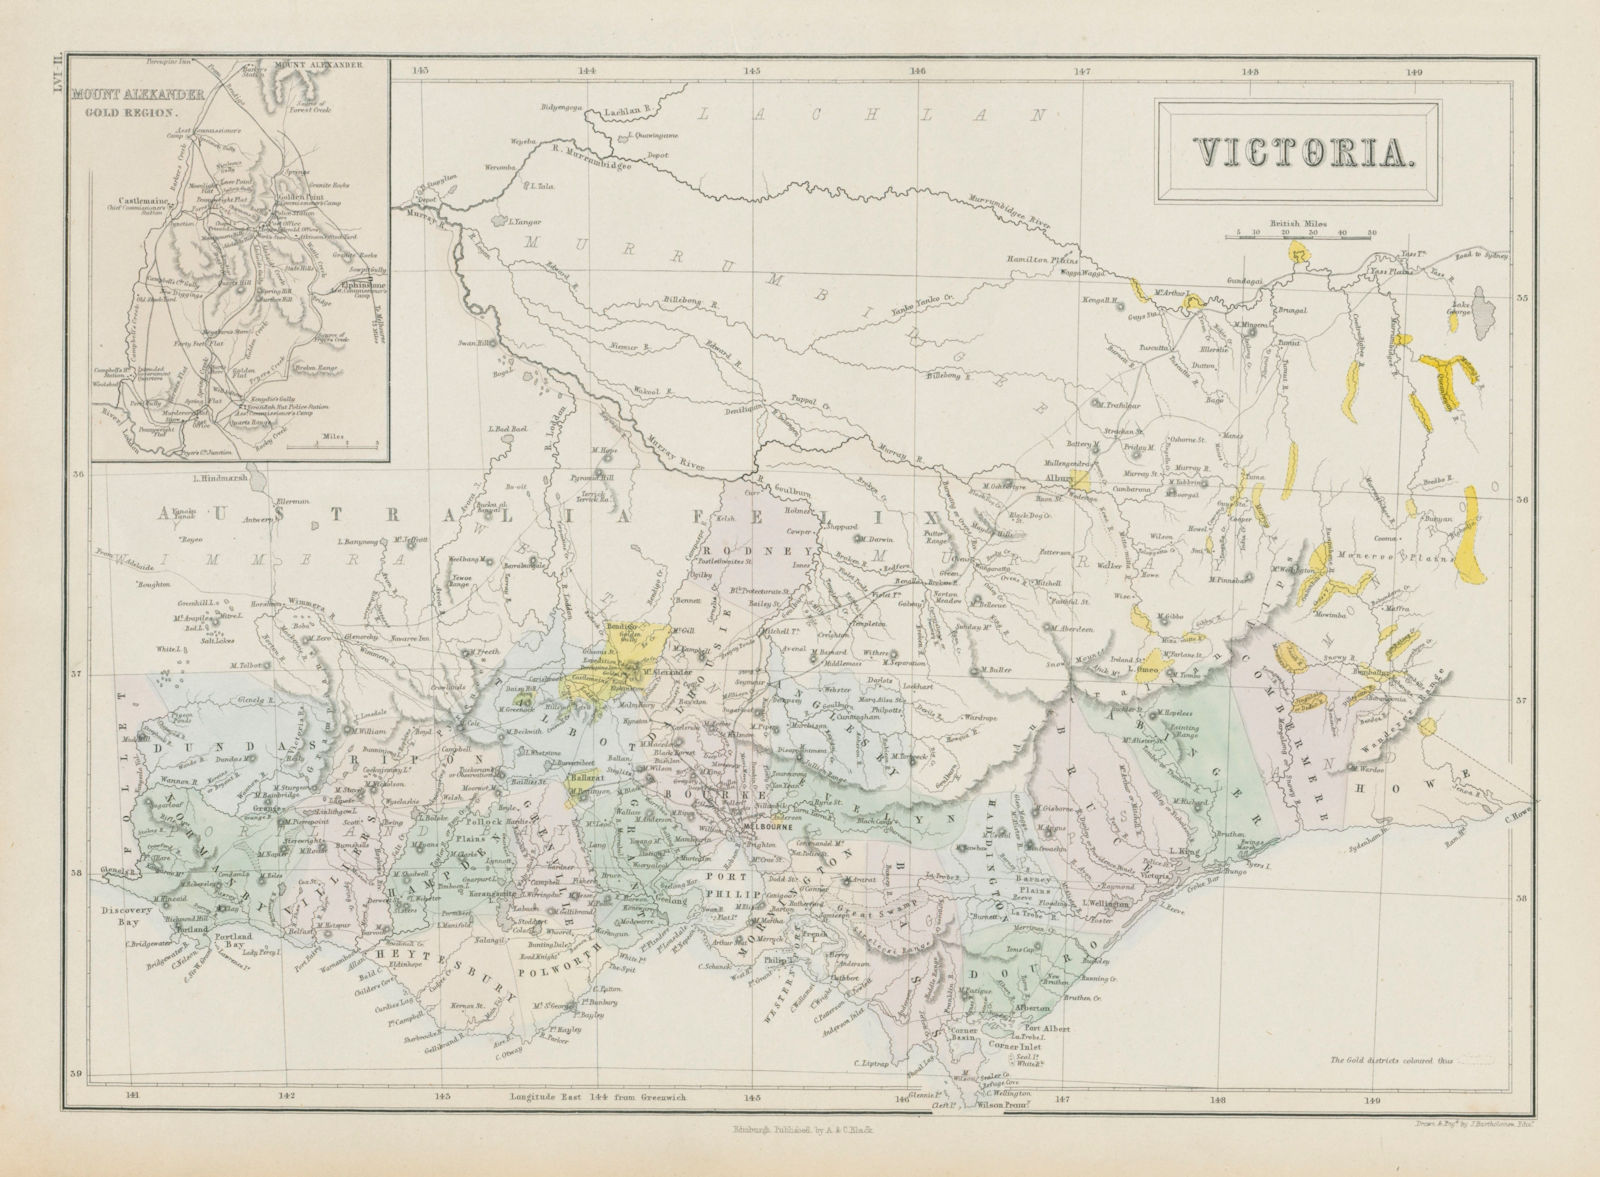 Victoria, Australia. Gold rush districts & Mount Alexander gold region 1856 map